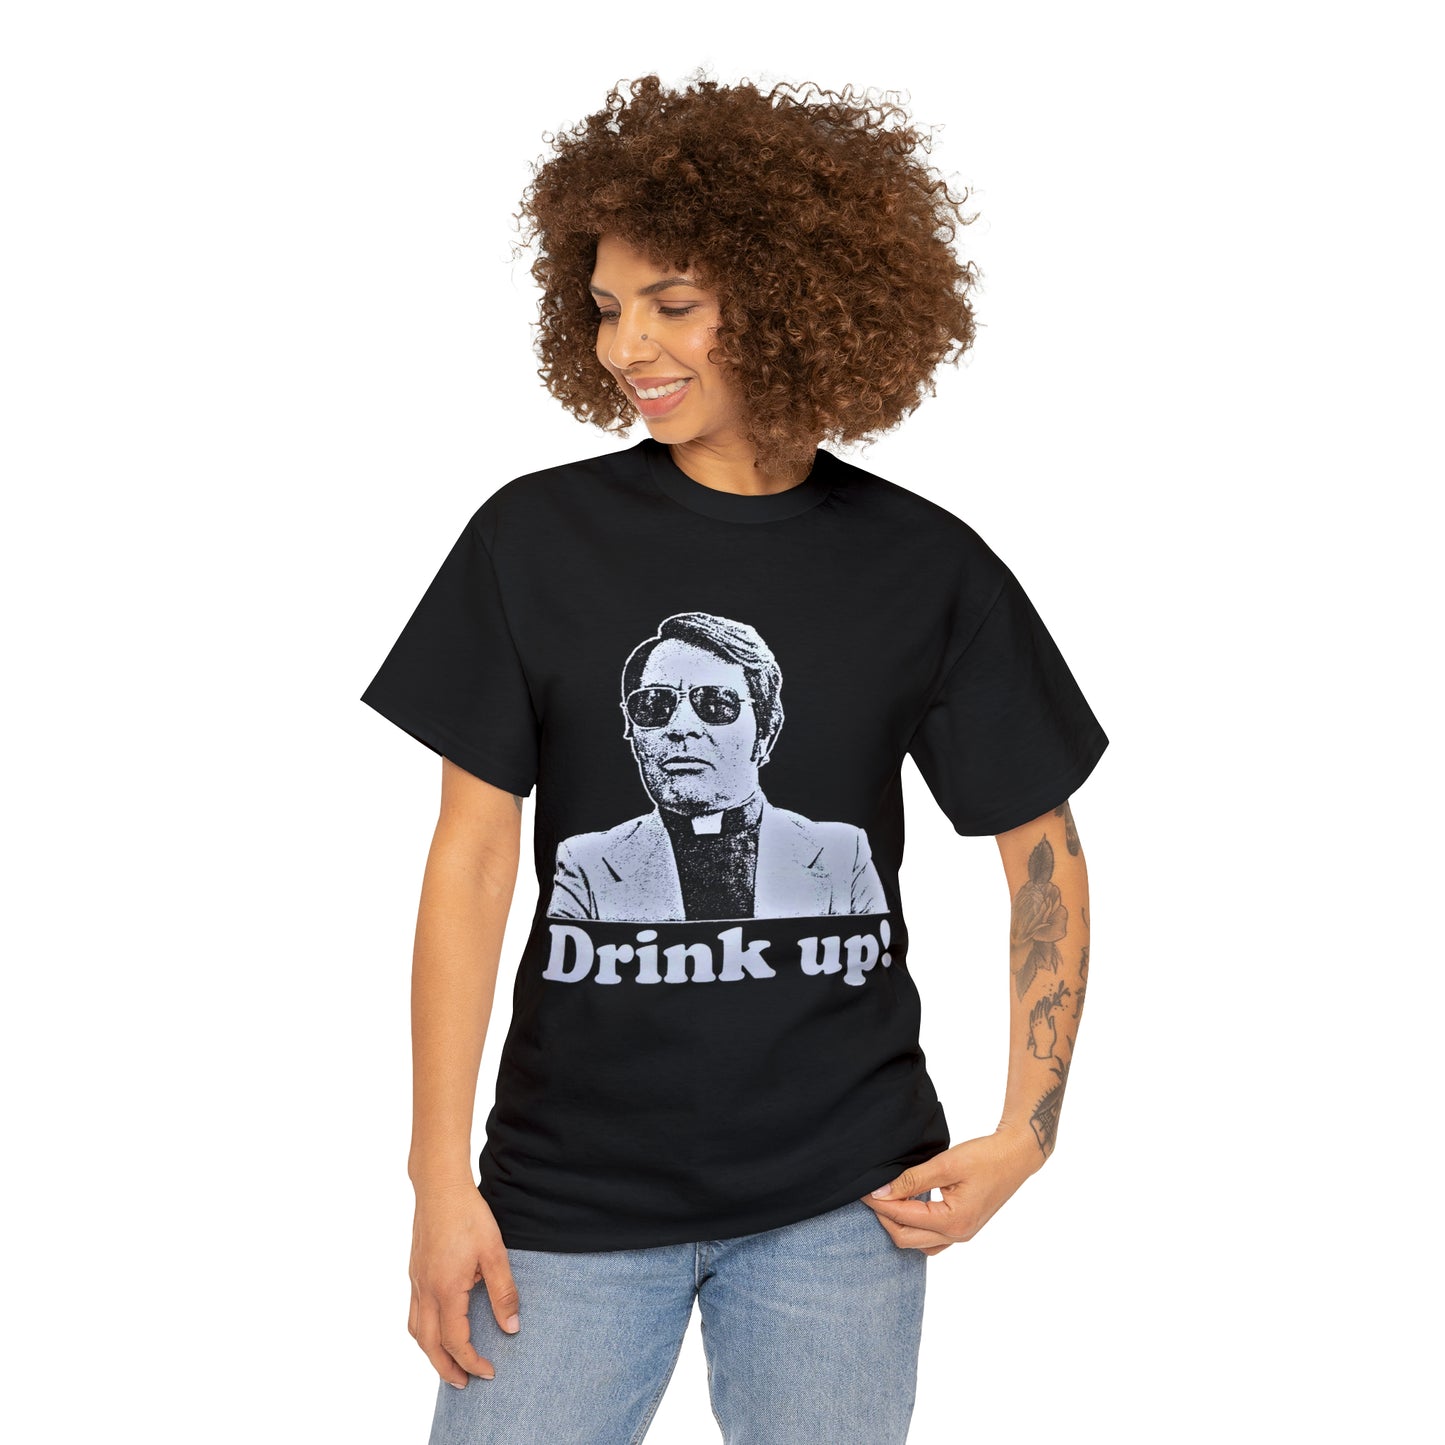 Jim Jones "Drink Up" Shirt